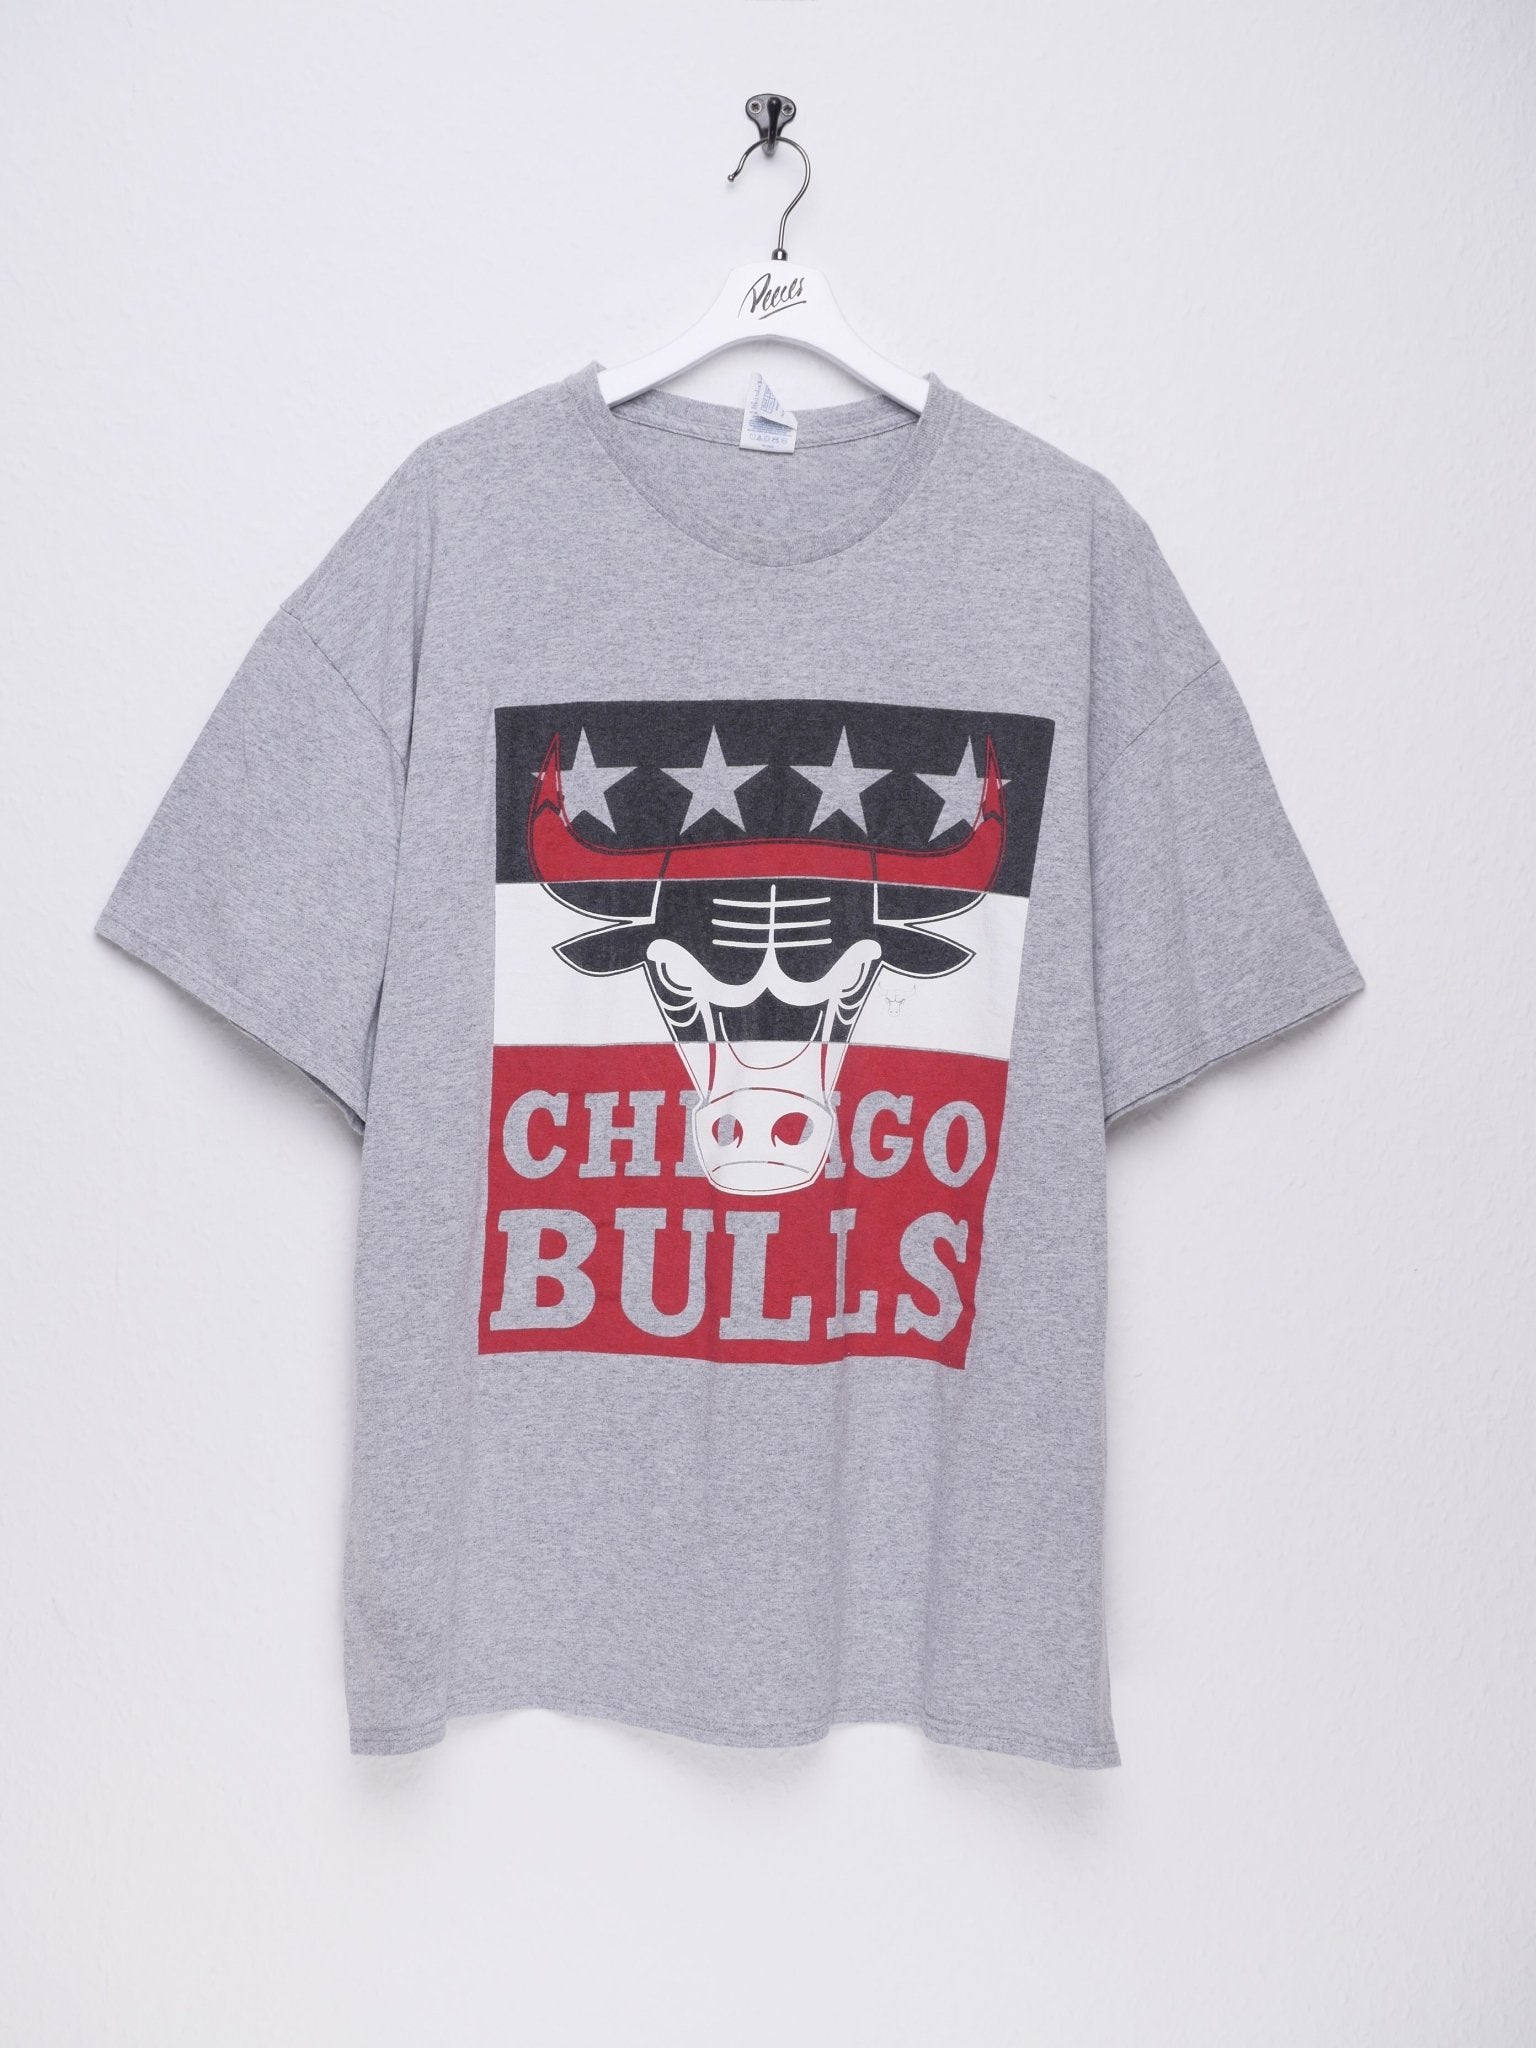 Chicago Bulls printed Logo grey Shirt - Peeces